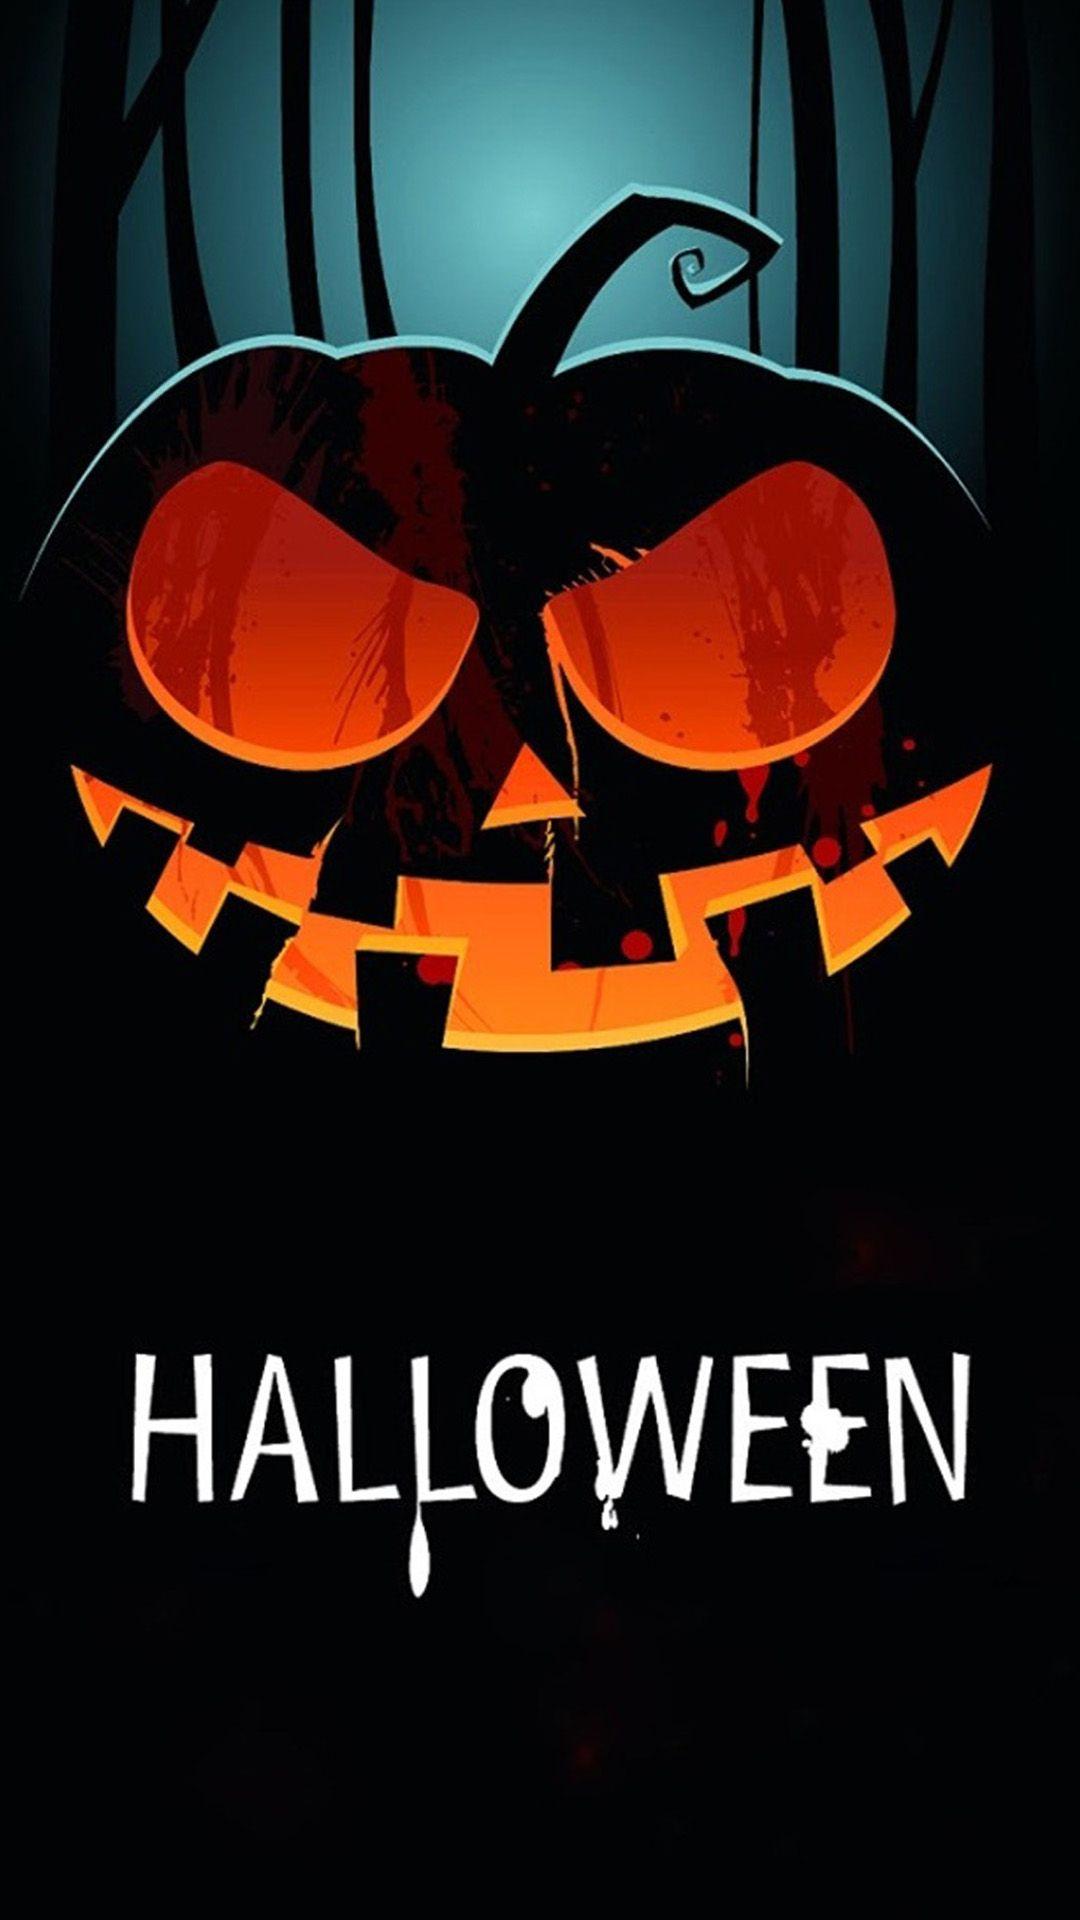 Jack o Lantern Halloween Pumpkin Wallpaper  iPhone Android  Desktop  Backgrounds